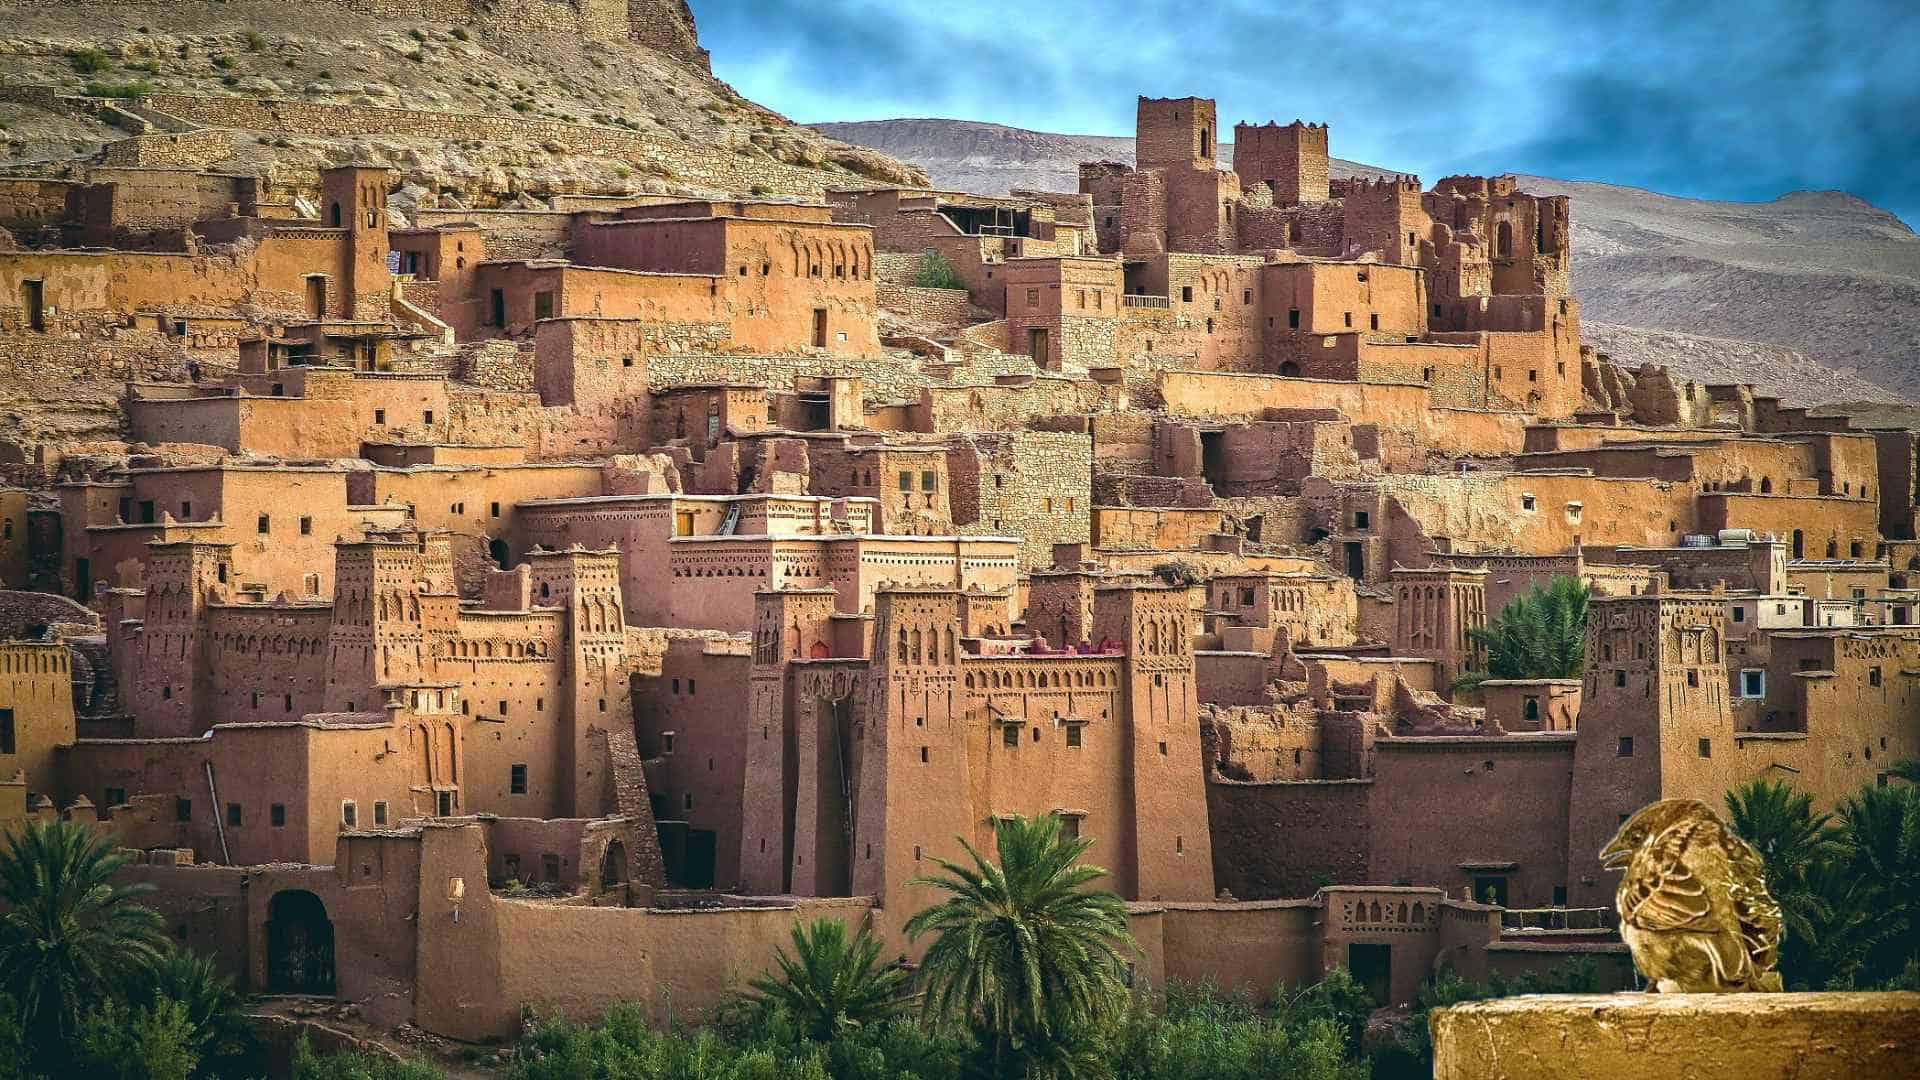 City of Morocco